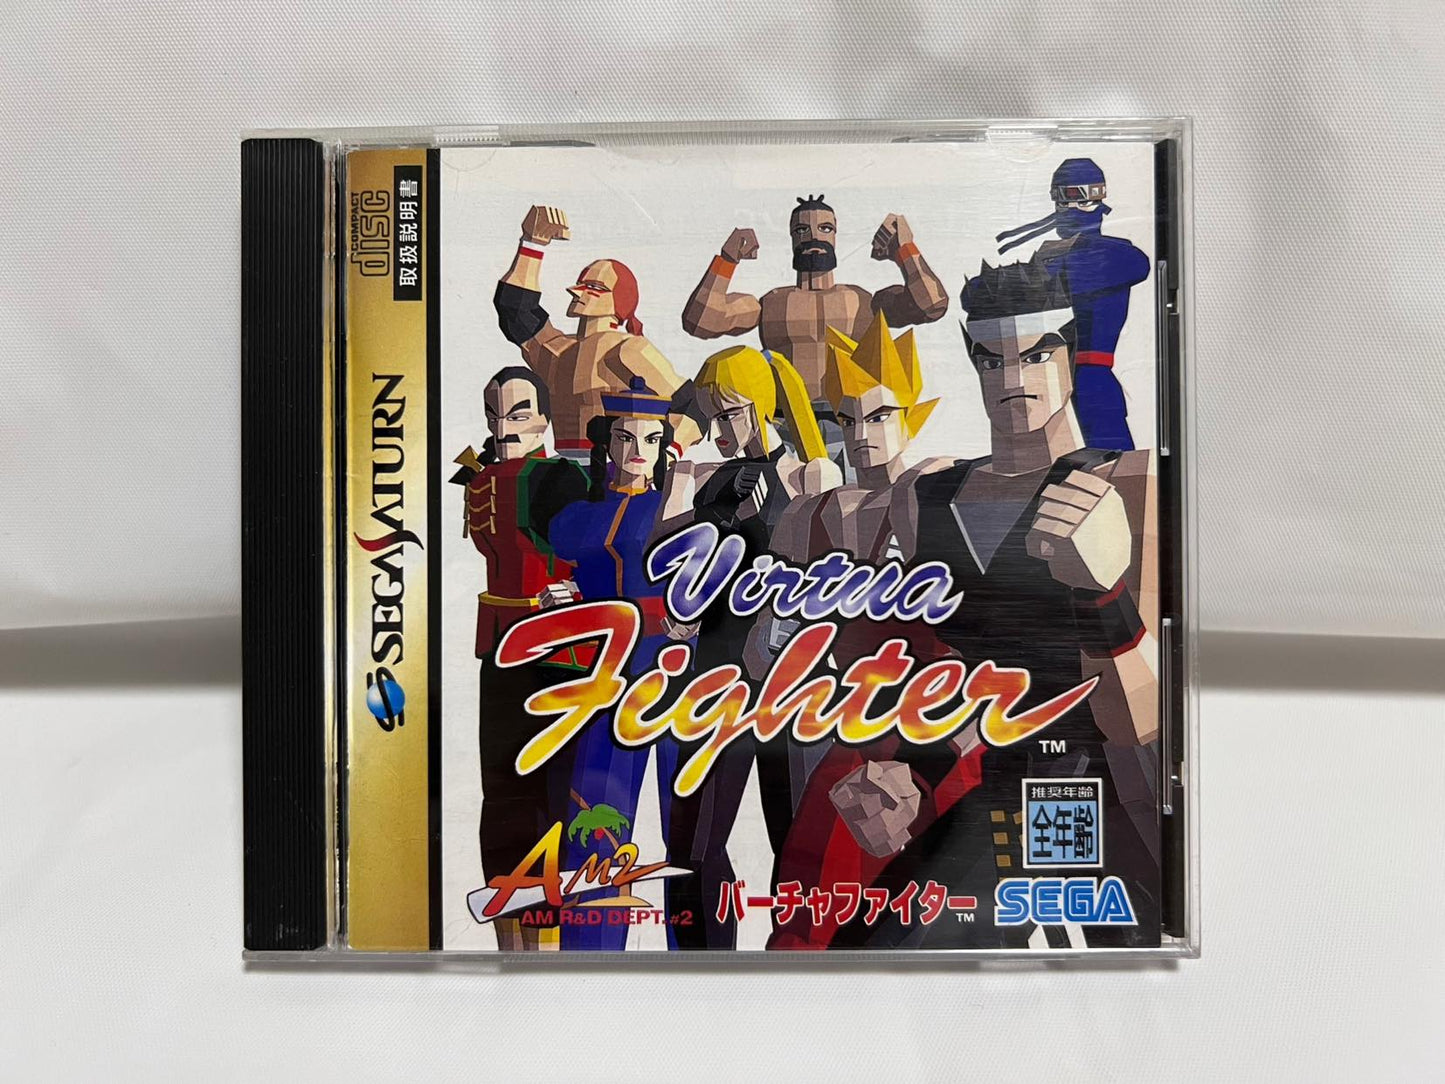 Whole sale Virtua Fighter Series SEGA Saturn Games set, Kids, Megamix-f1006-